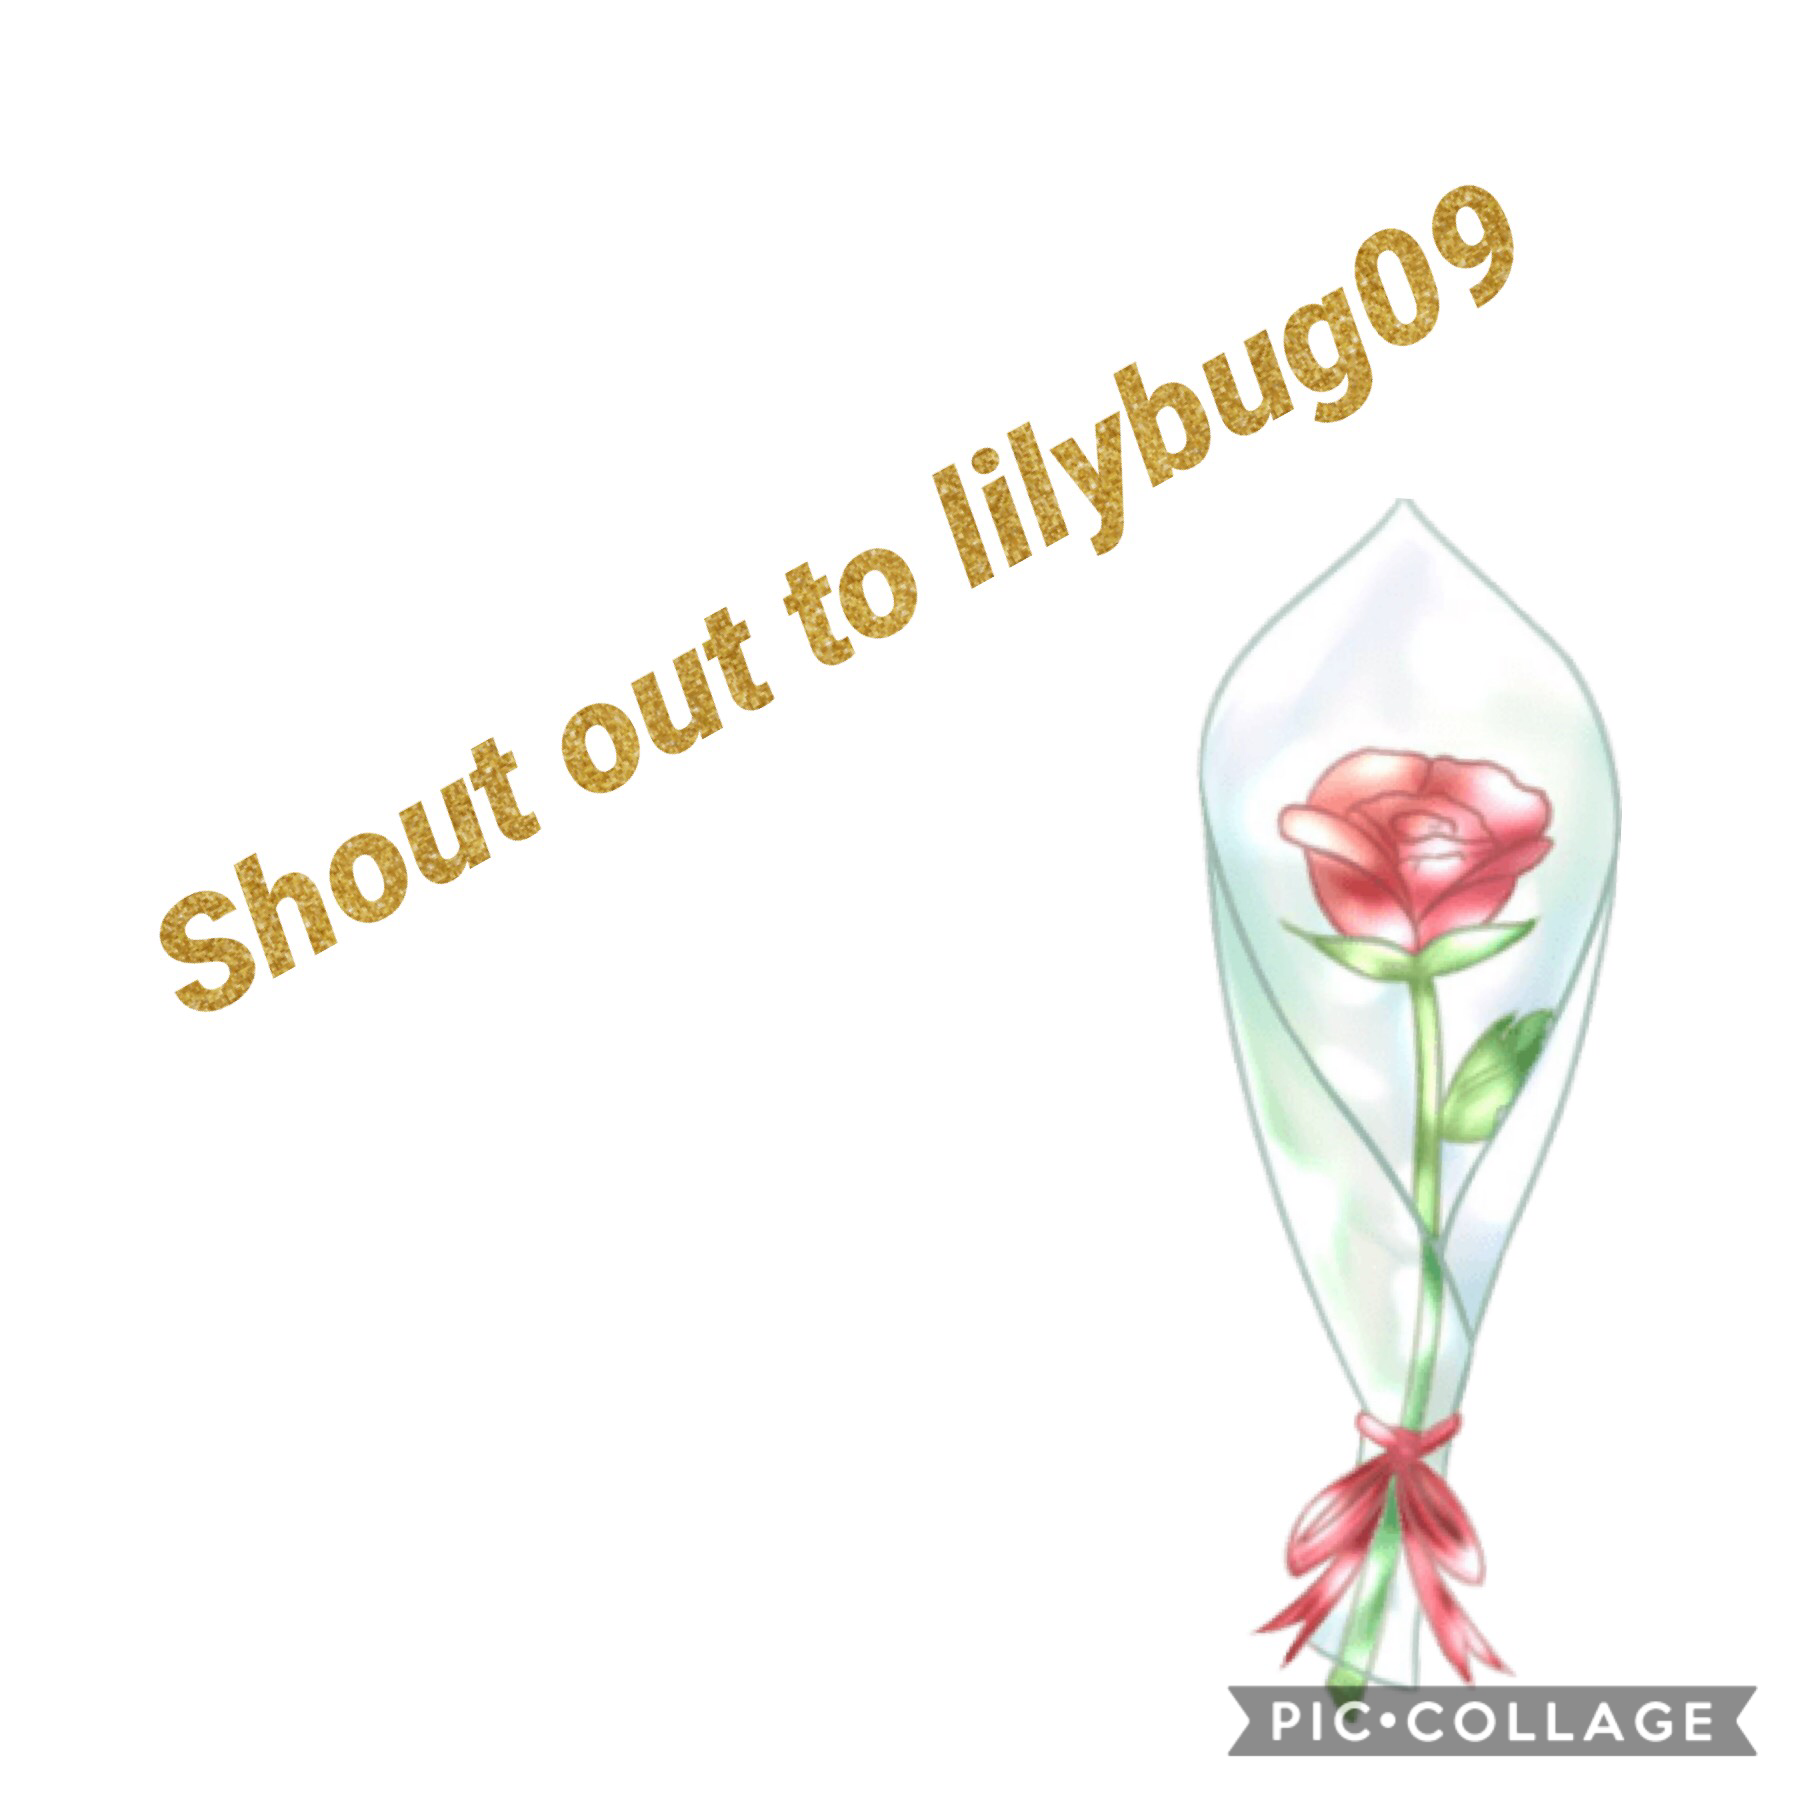 Lilybug09